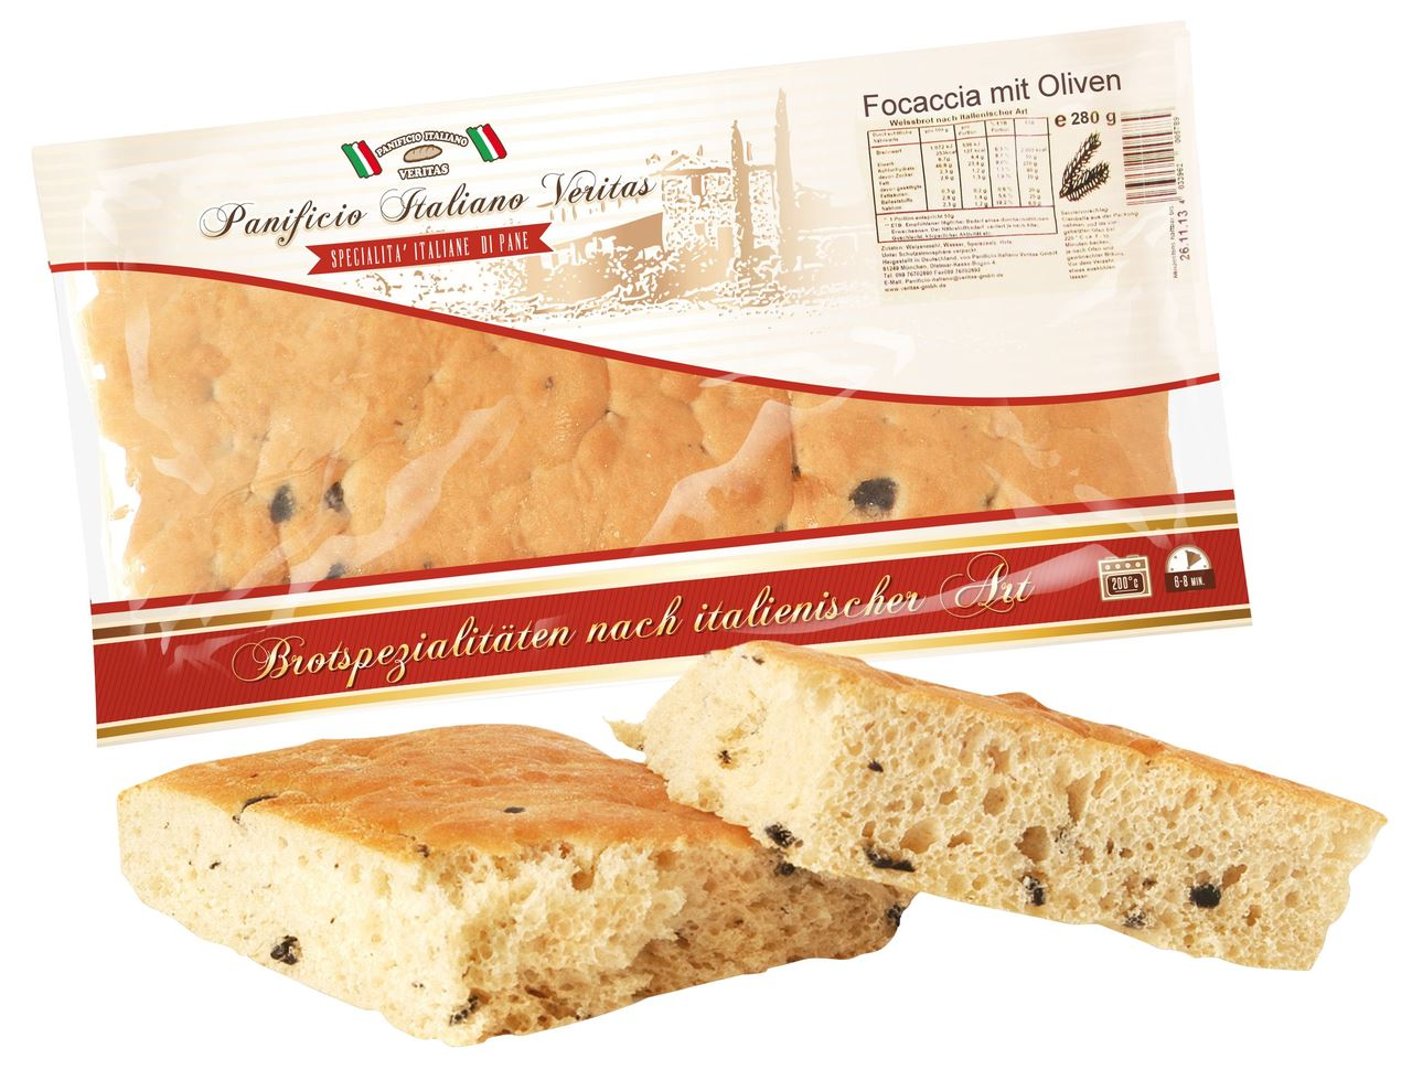 Panificio Italiano Veritas - Focaccia con Olive Italienische Brotspezialität mit mediterranen Oliven 280 g